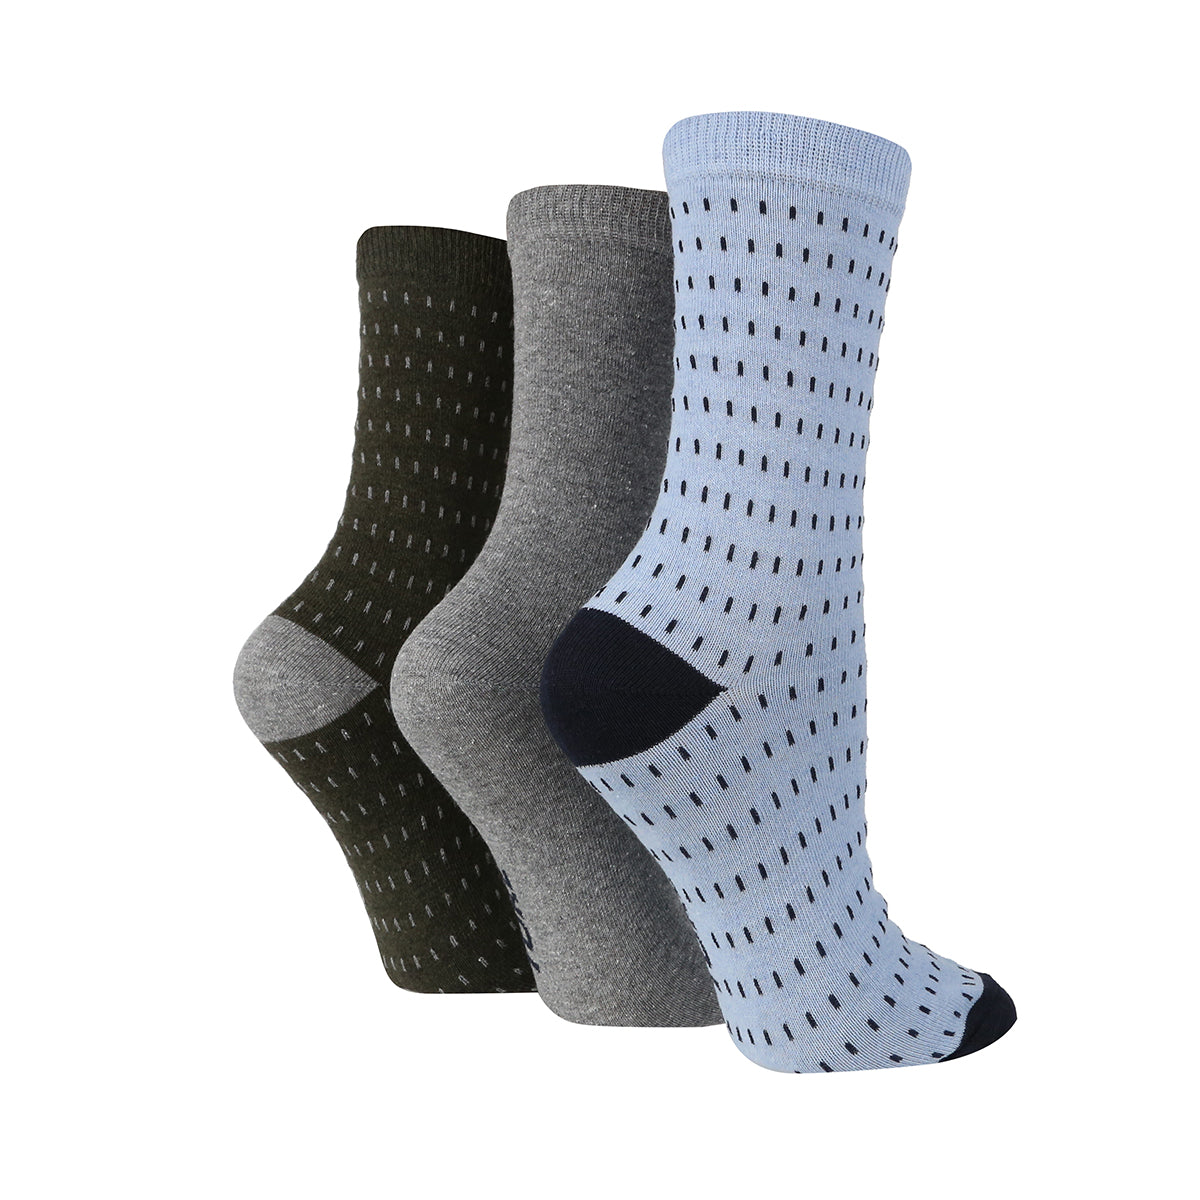 Women's Socks with Small Dash - 3 Pairs